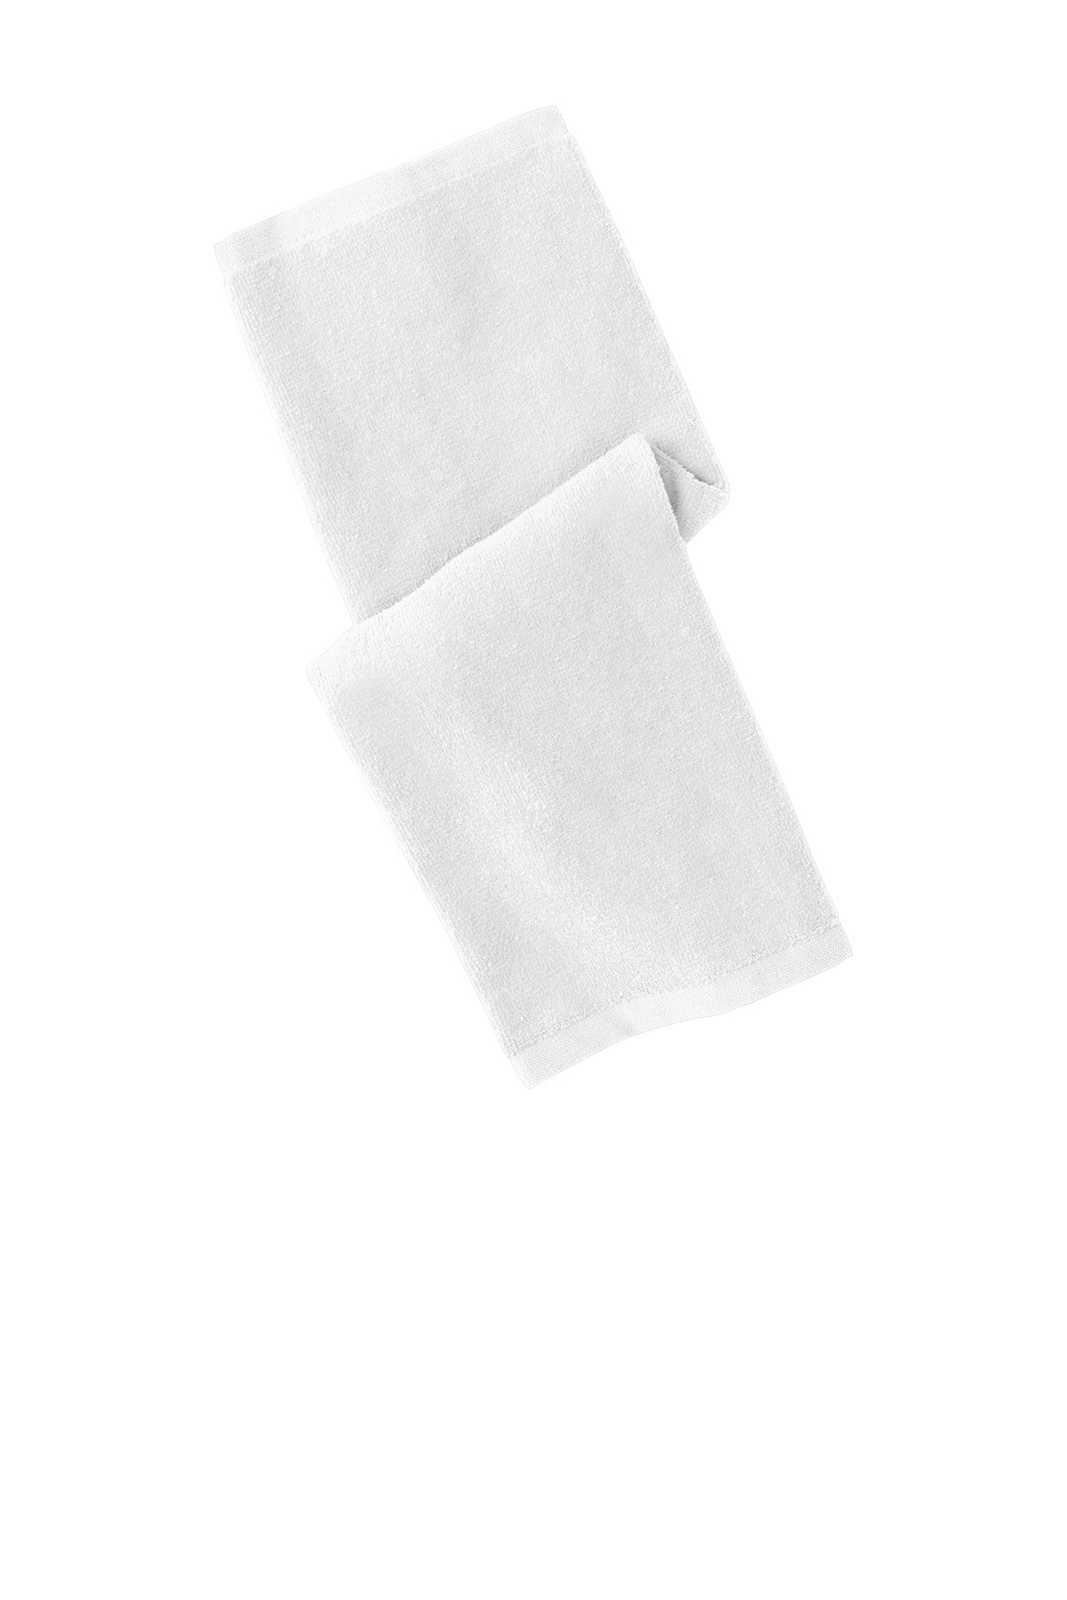 Port Authority PT390 Hemmed Towel - White - HIT a Double - 1